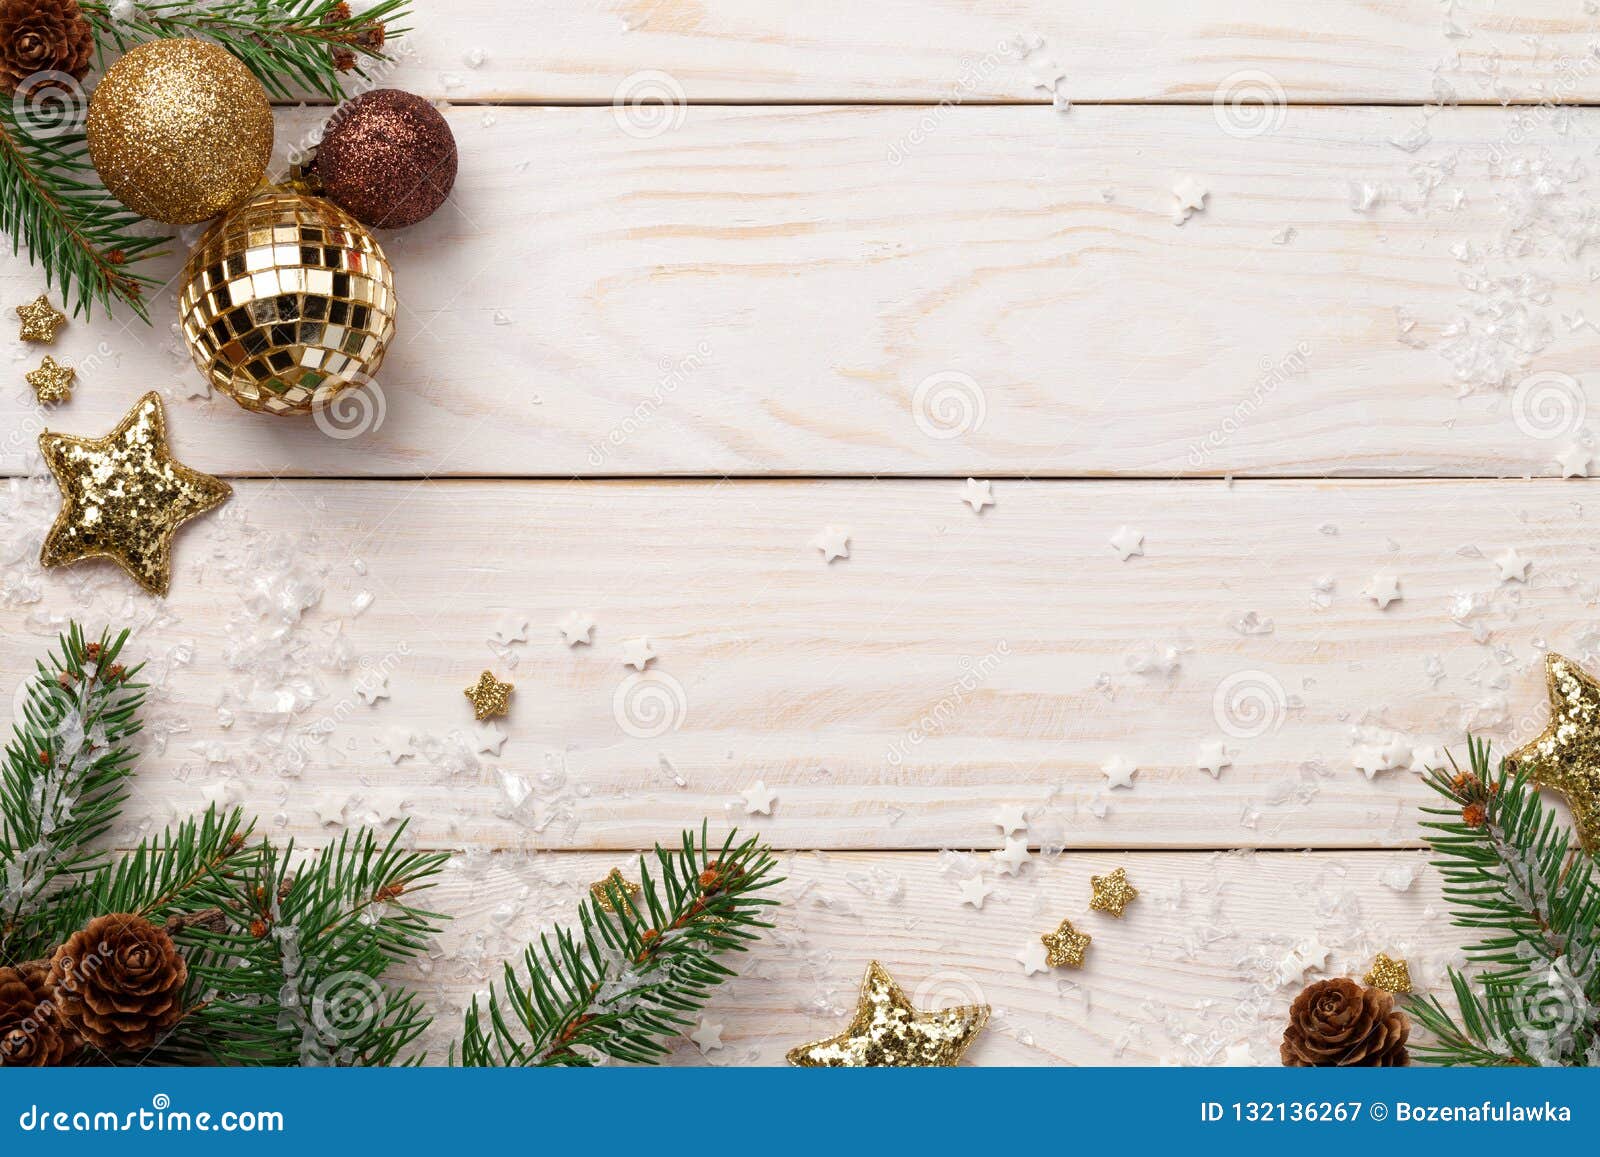 Christmas Holiday Background Stock Image - Image of pine, bauble: 132136267